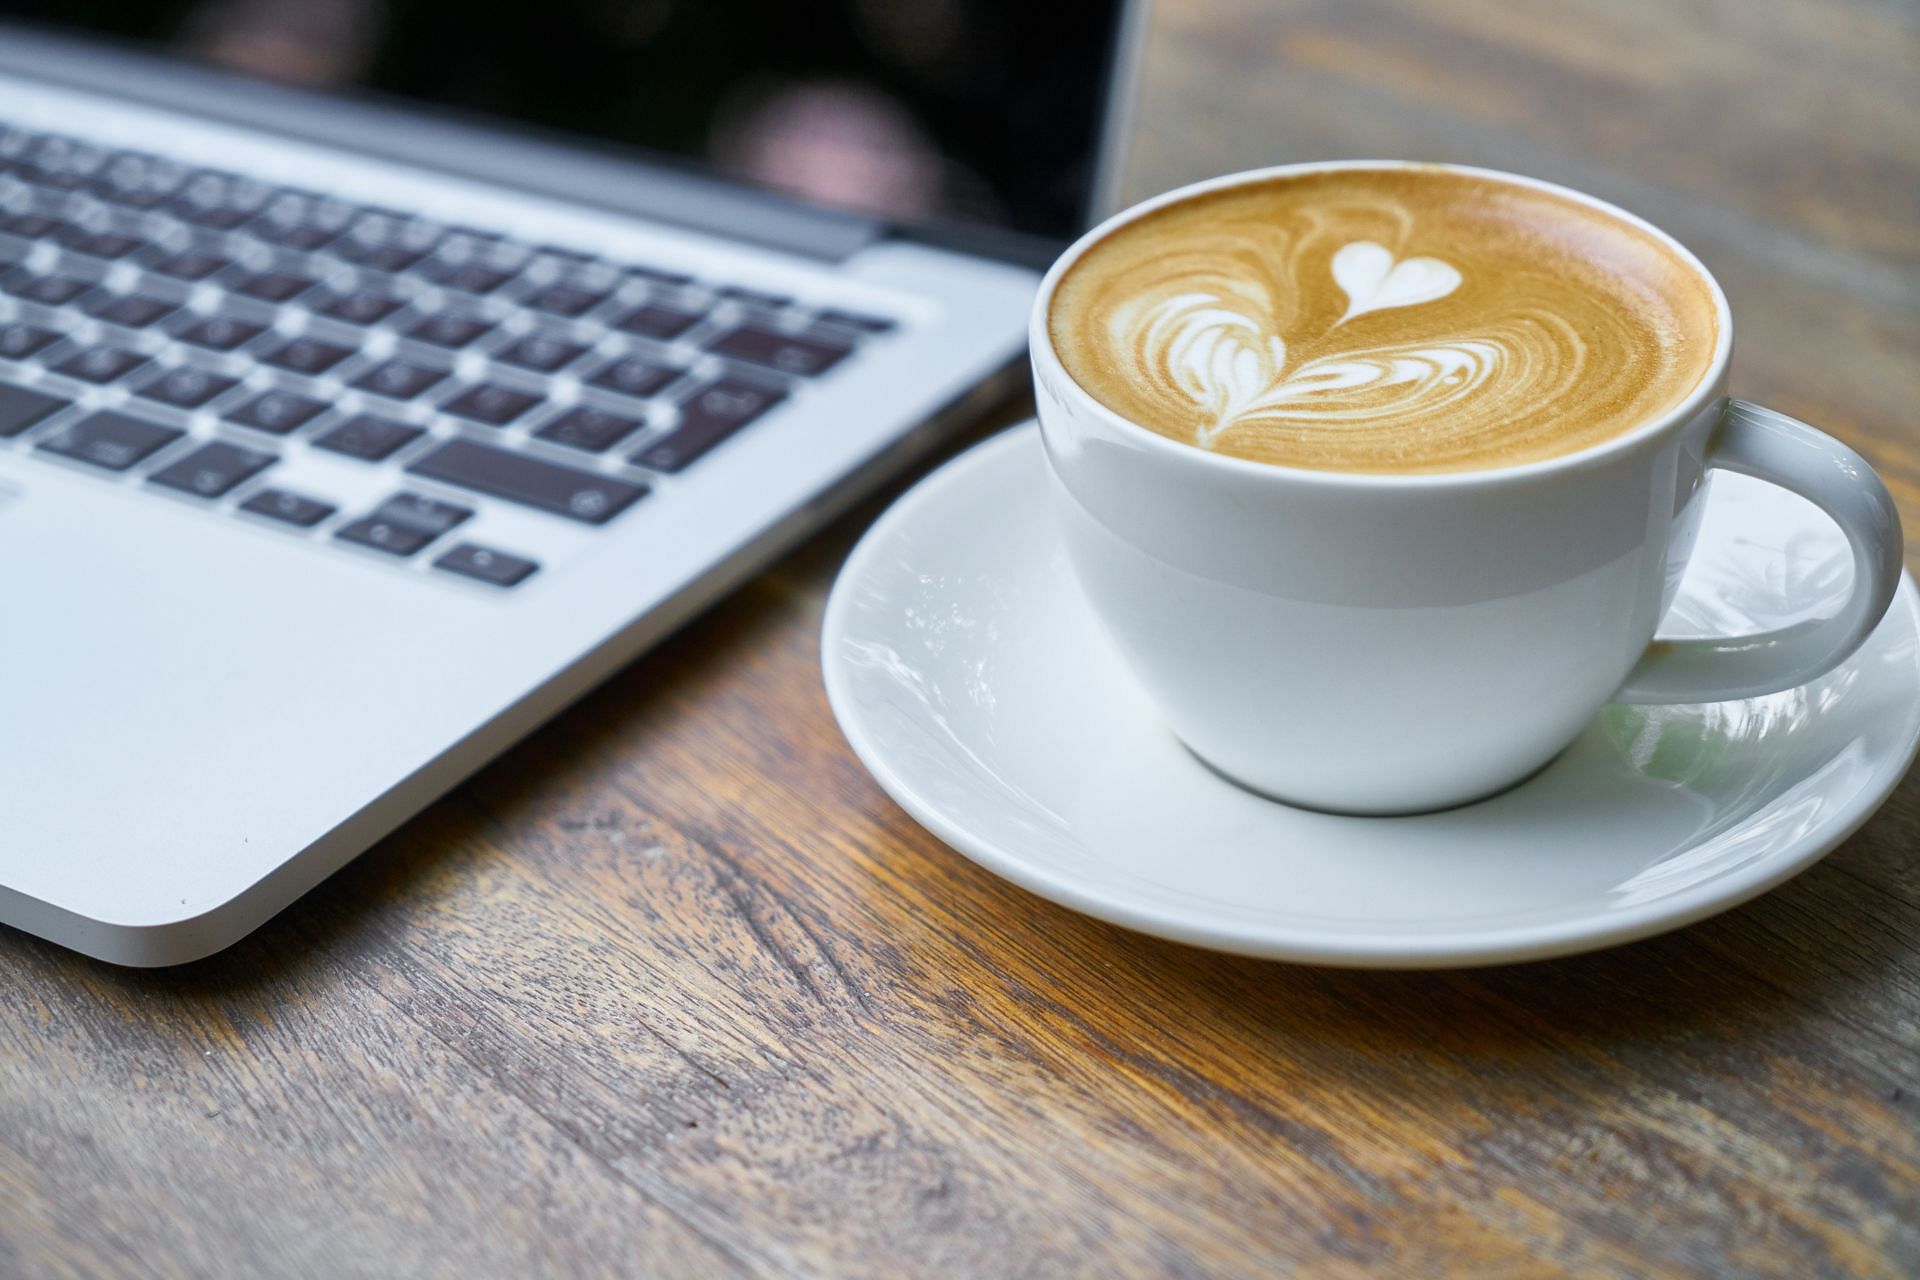 Coffee stimulates the digestive system. (Image via Pexels/Pixabay)